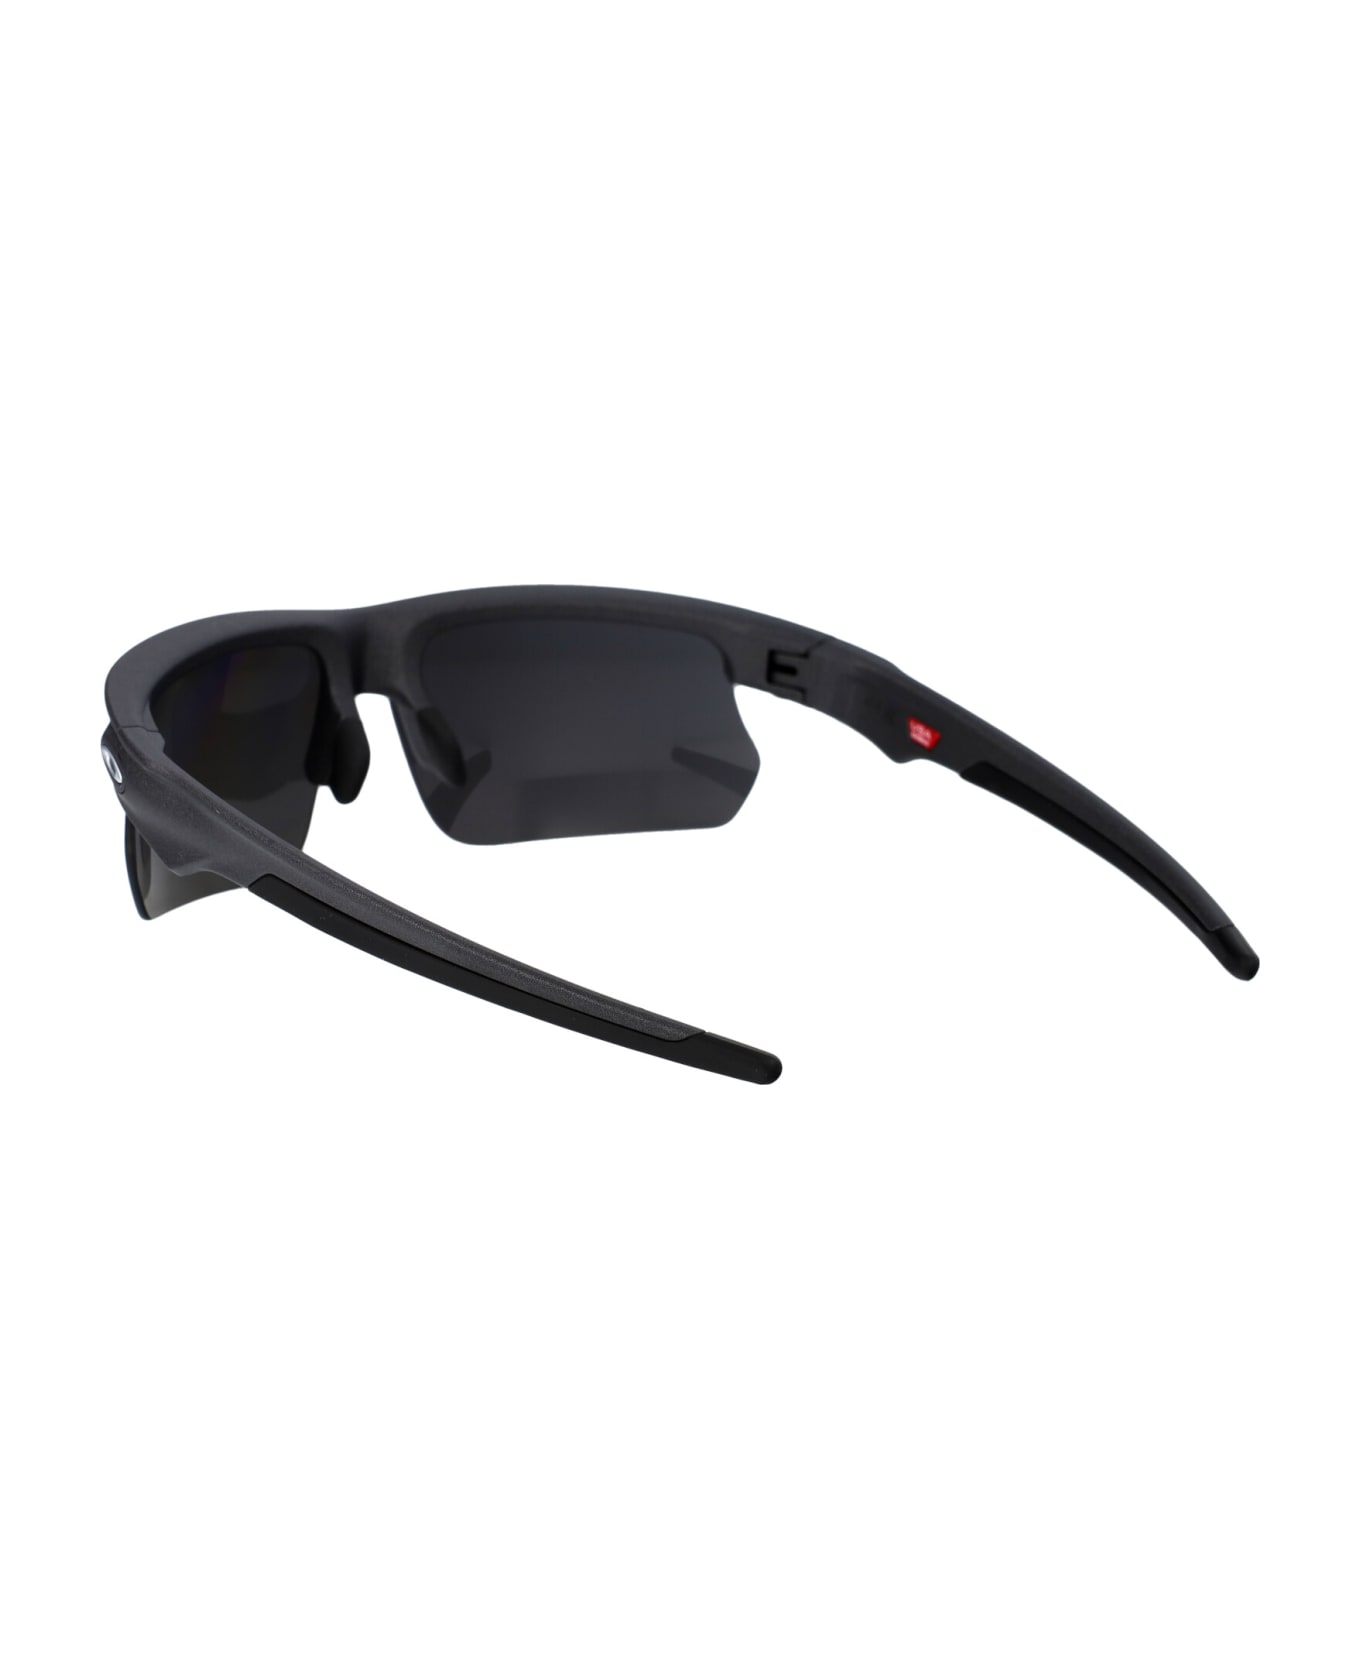 Oakley Bisphaera Sunglasses - 940001 Matte Black